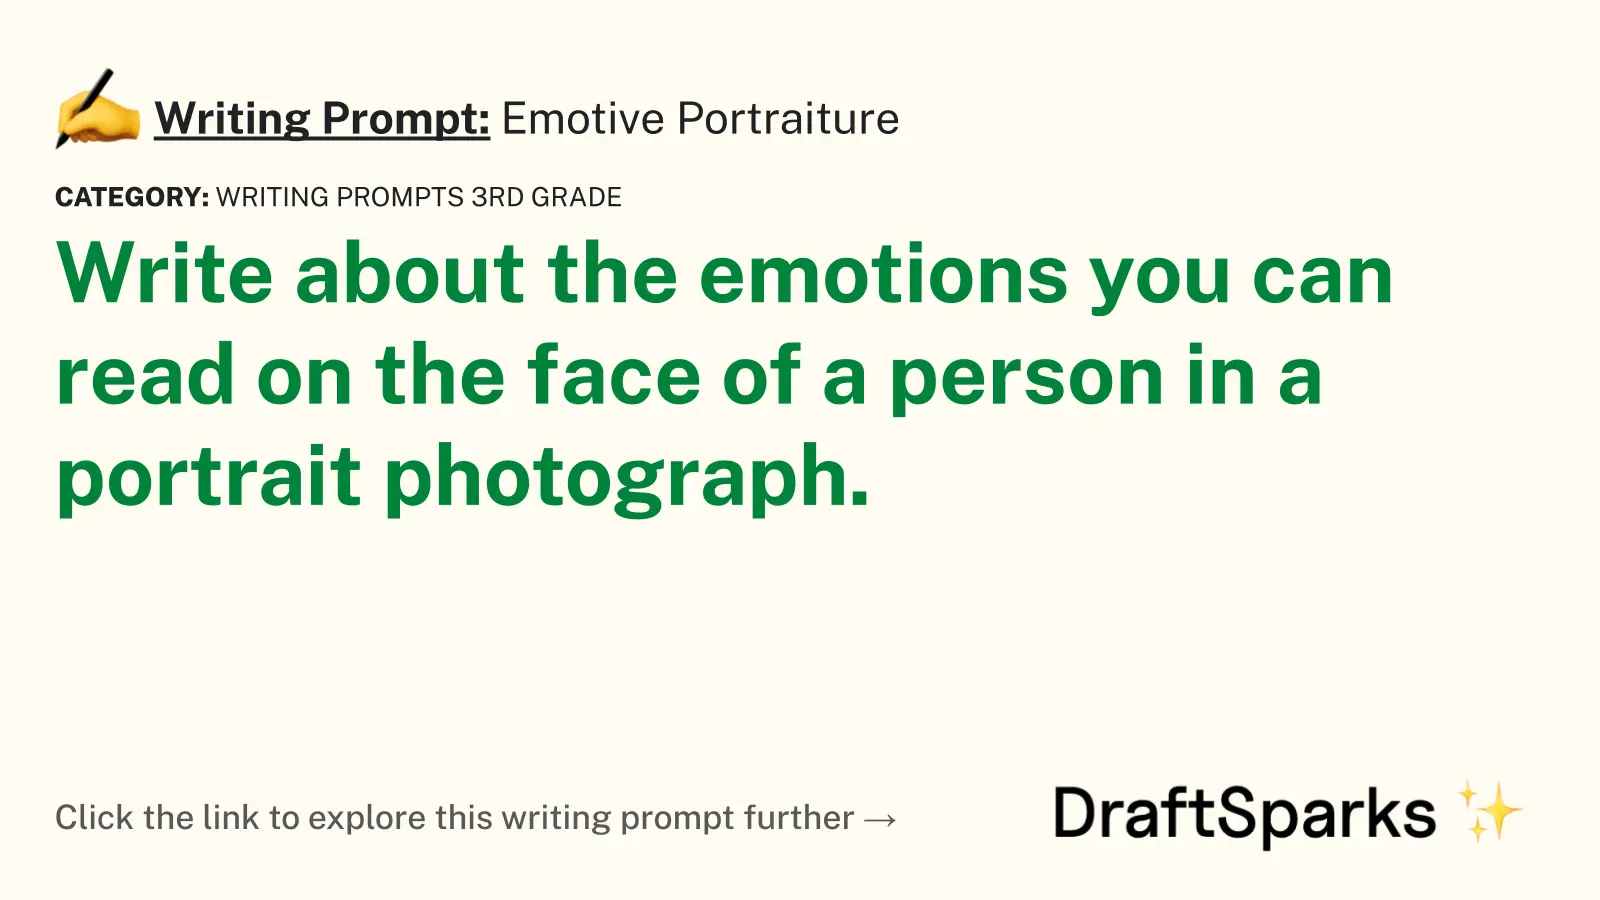 Emotive Portraiture